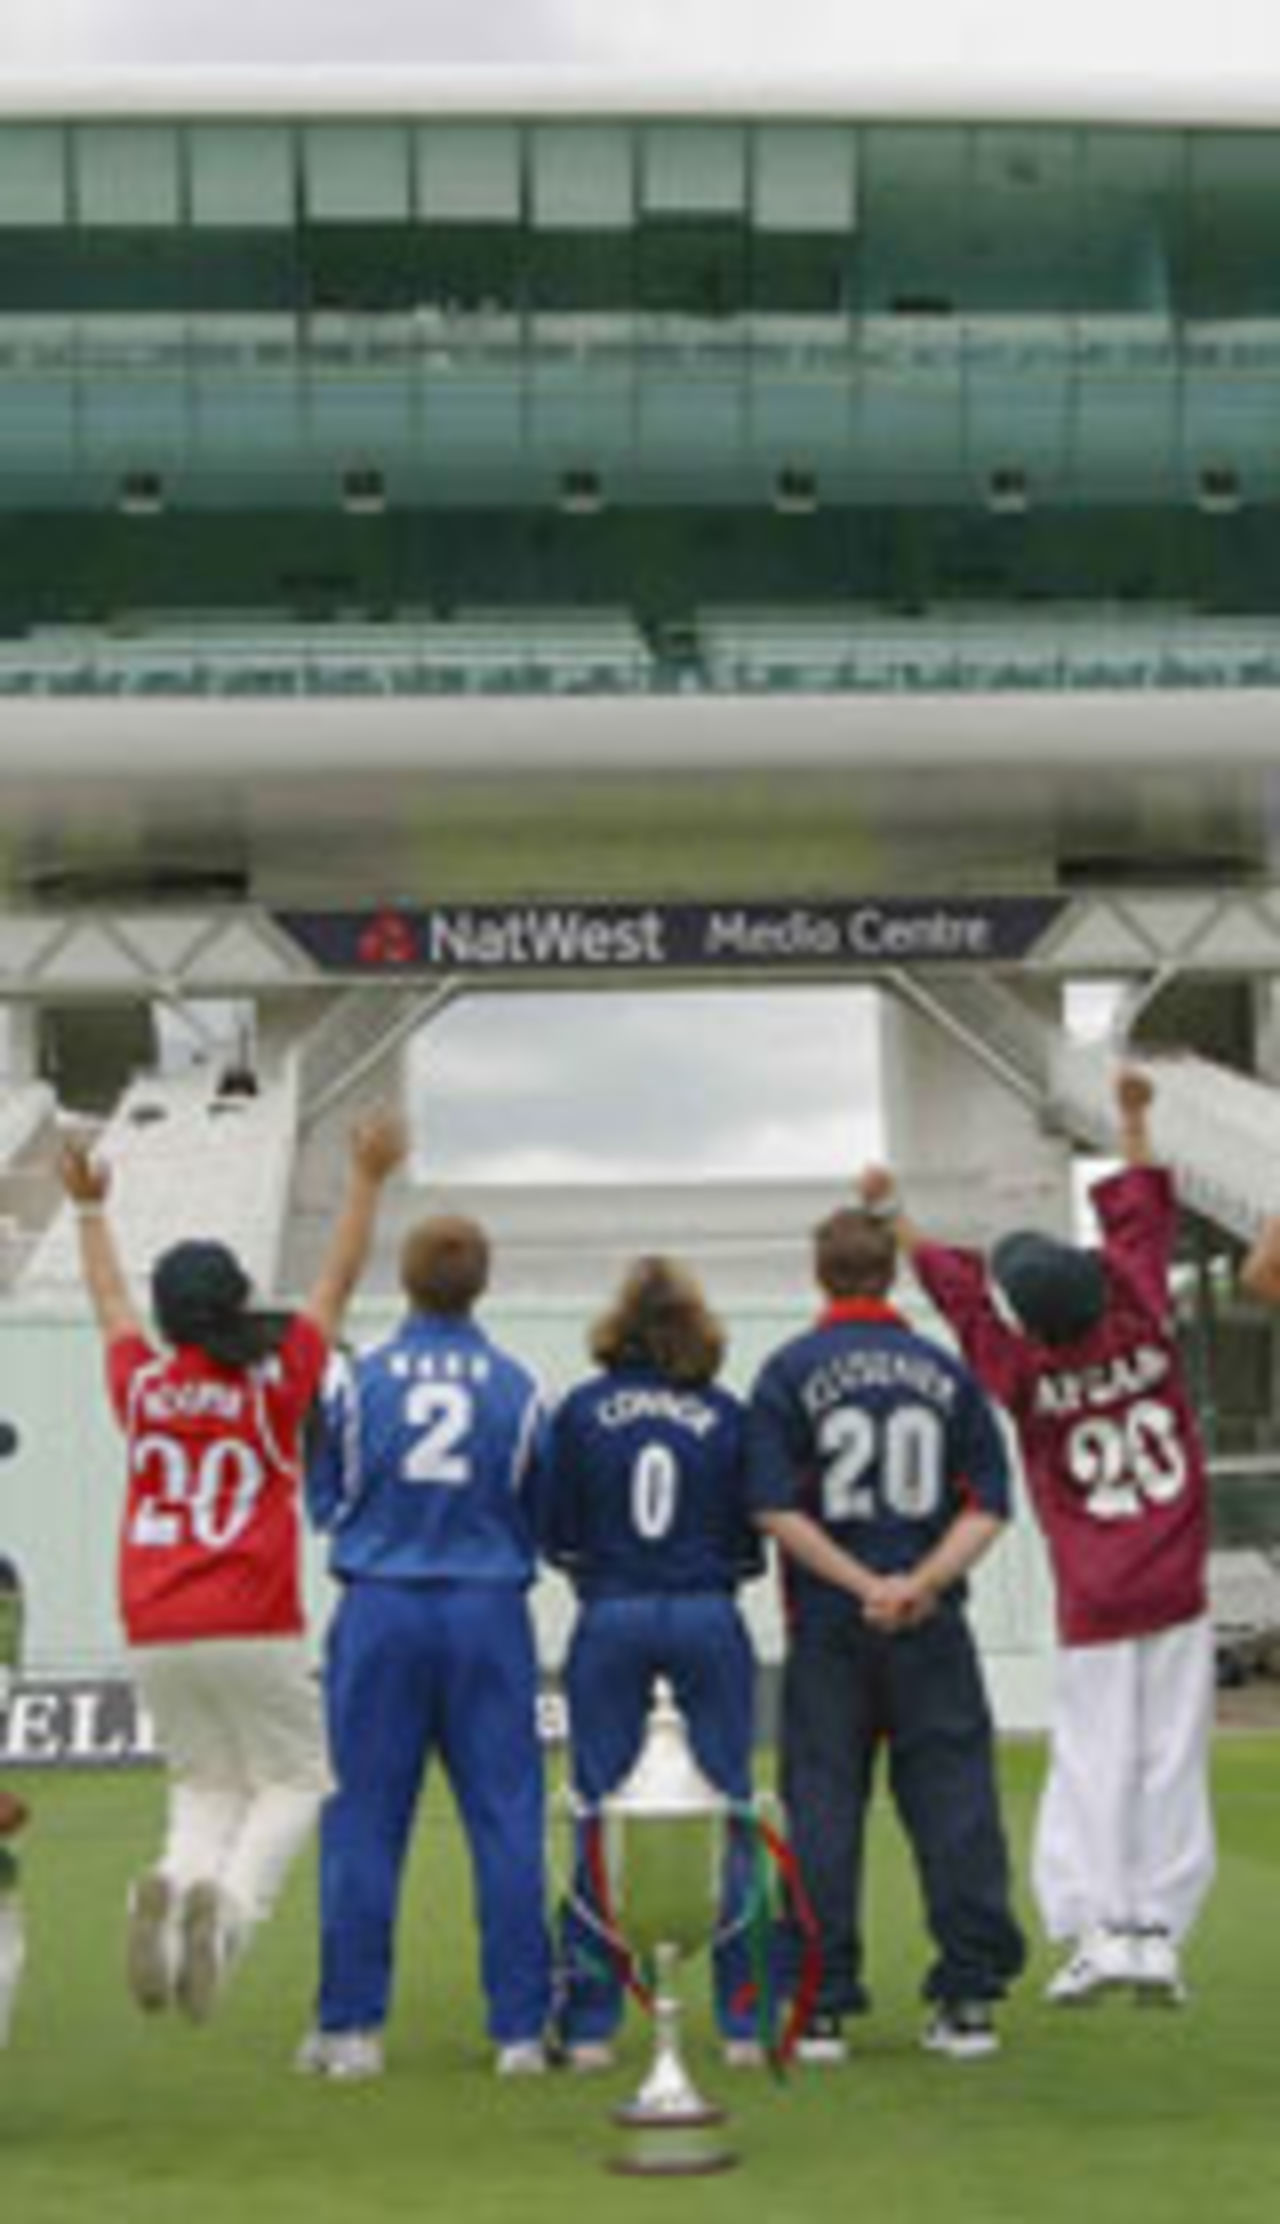 Twenty20 Cup launch, Lord's, June 18, 2004